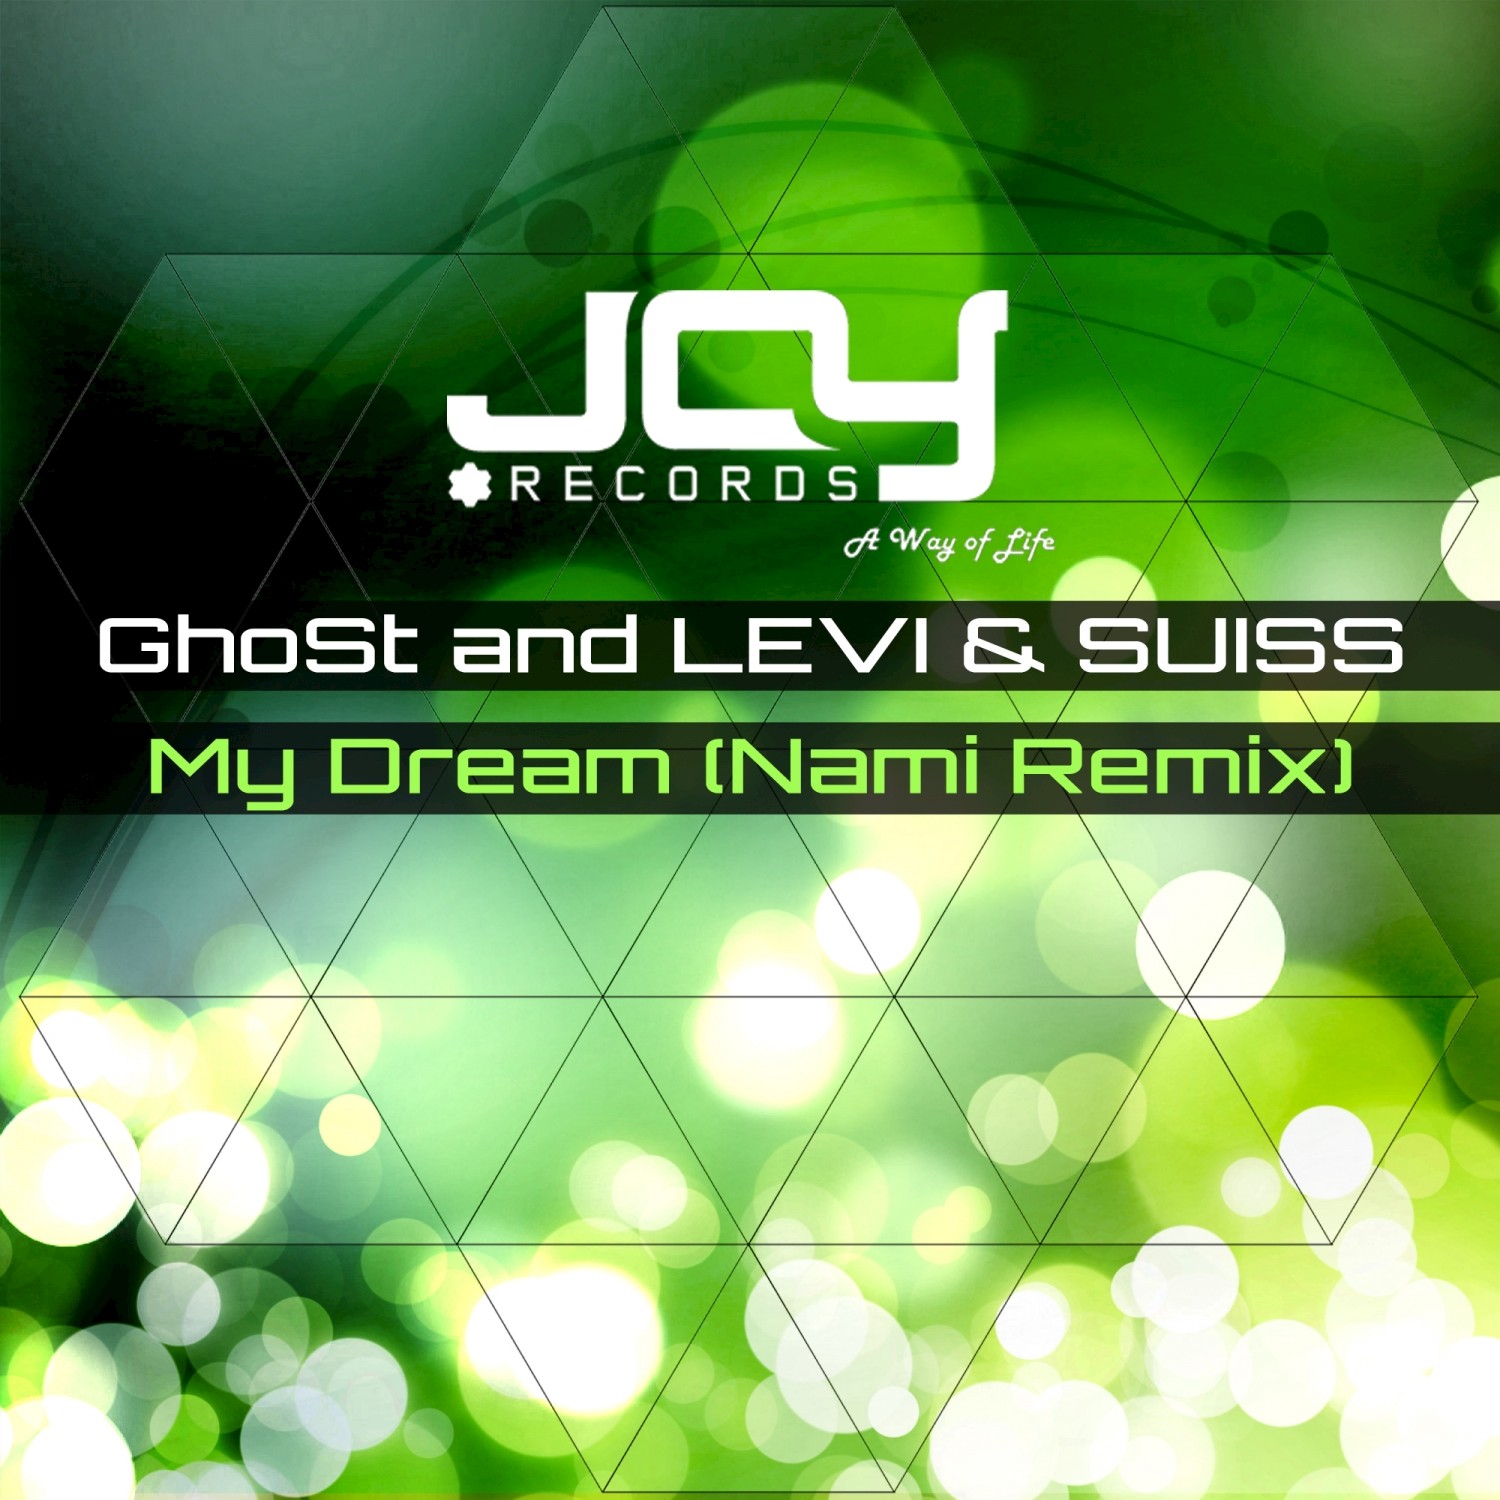 My Dream (Nami Remix)